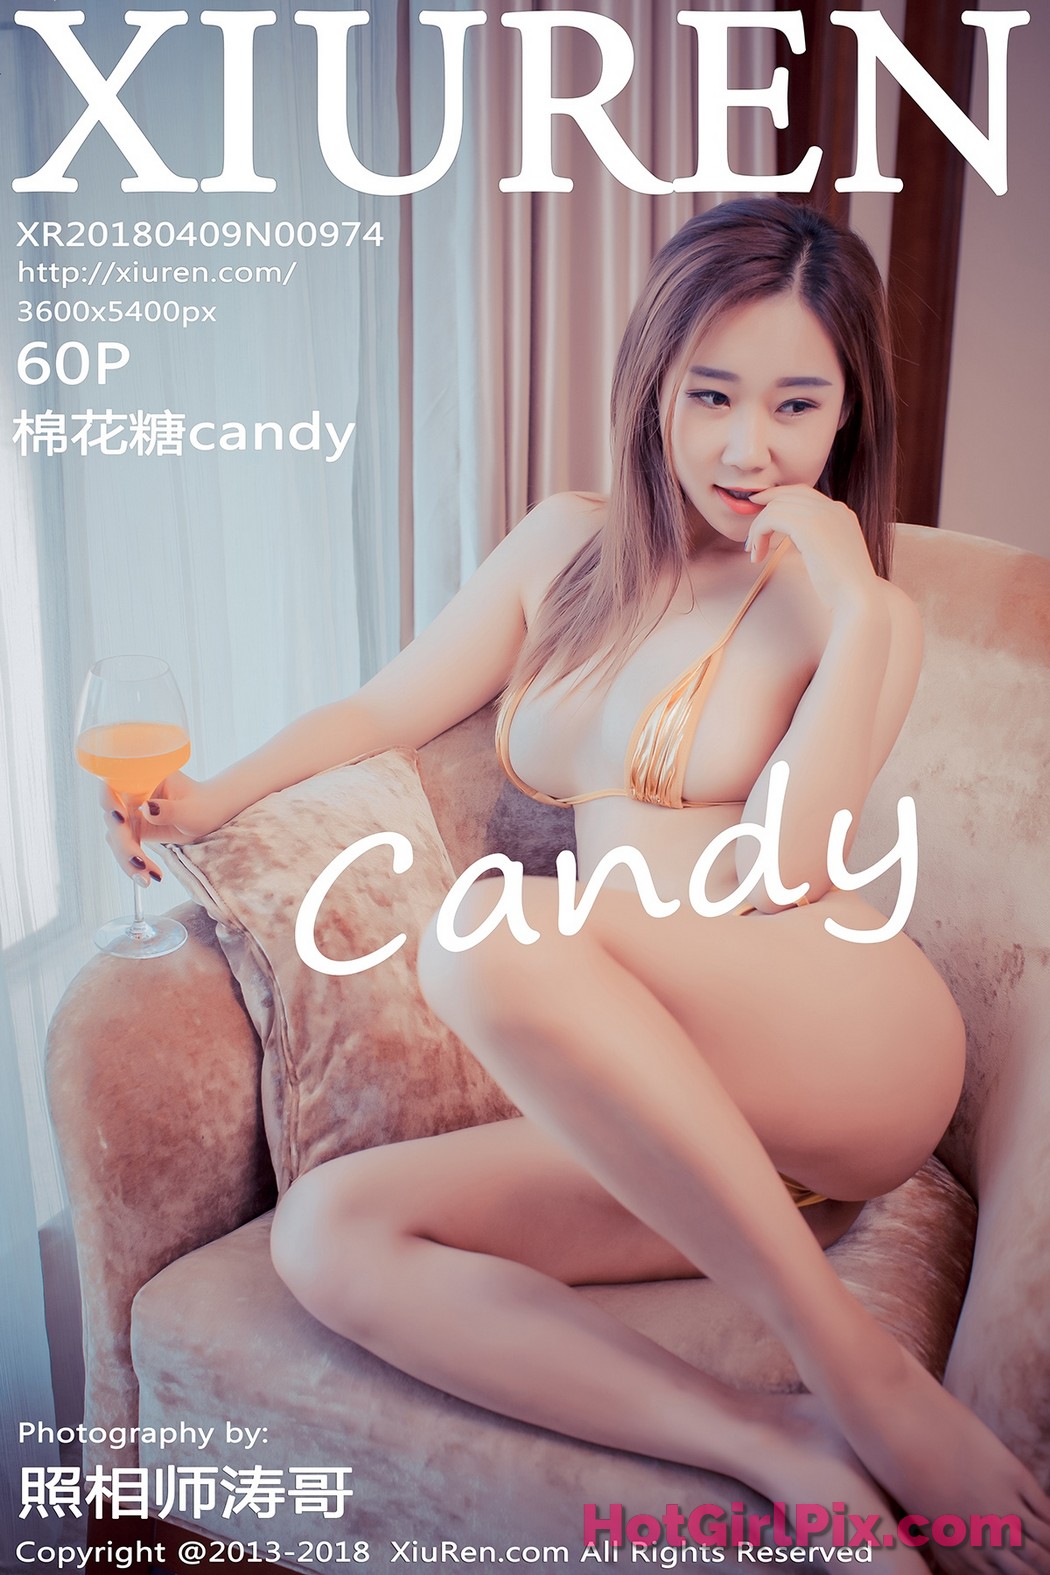 [XIUREN] No.974 棉花糖candy Cover Photo